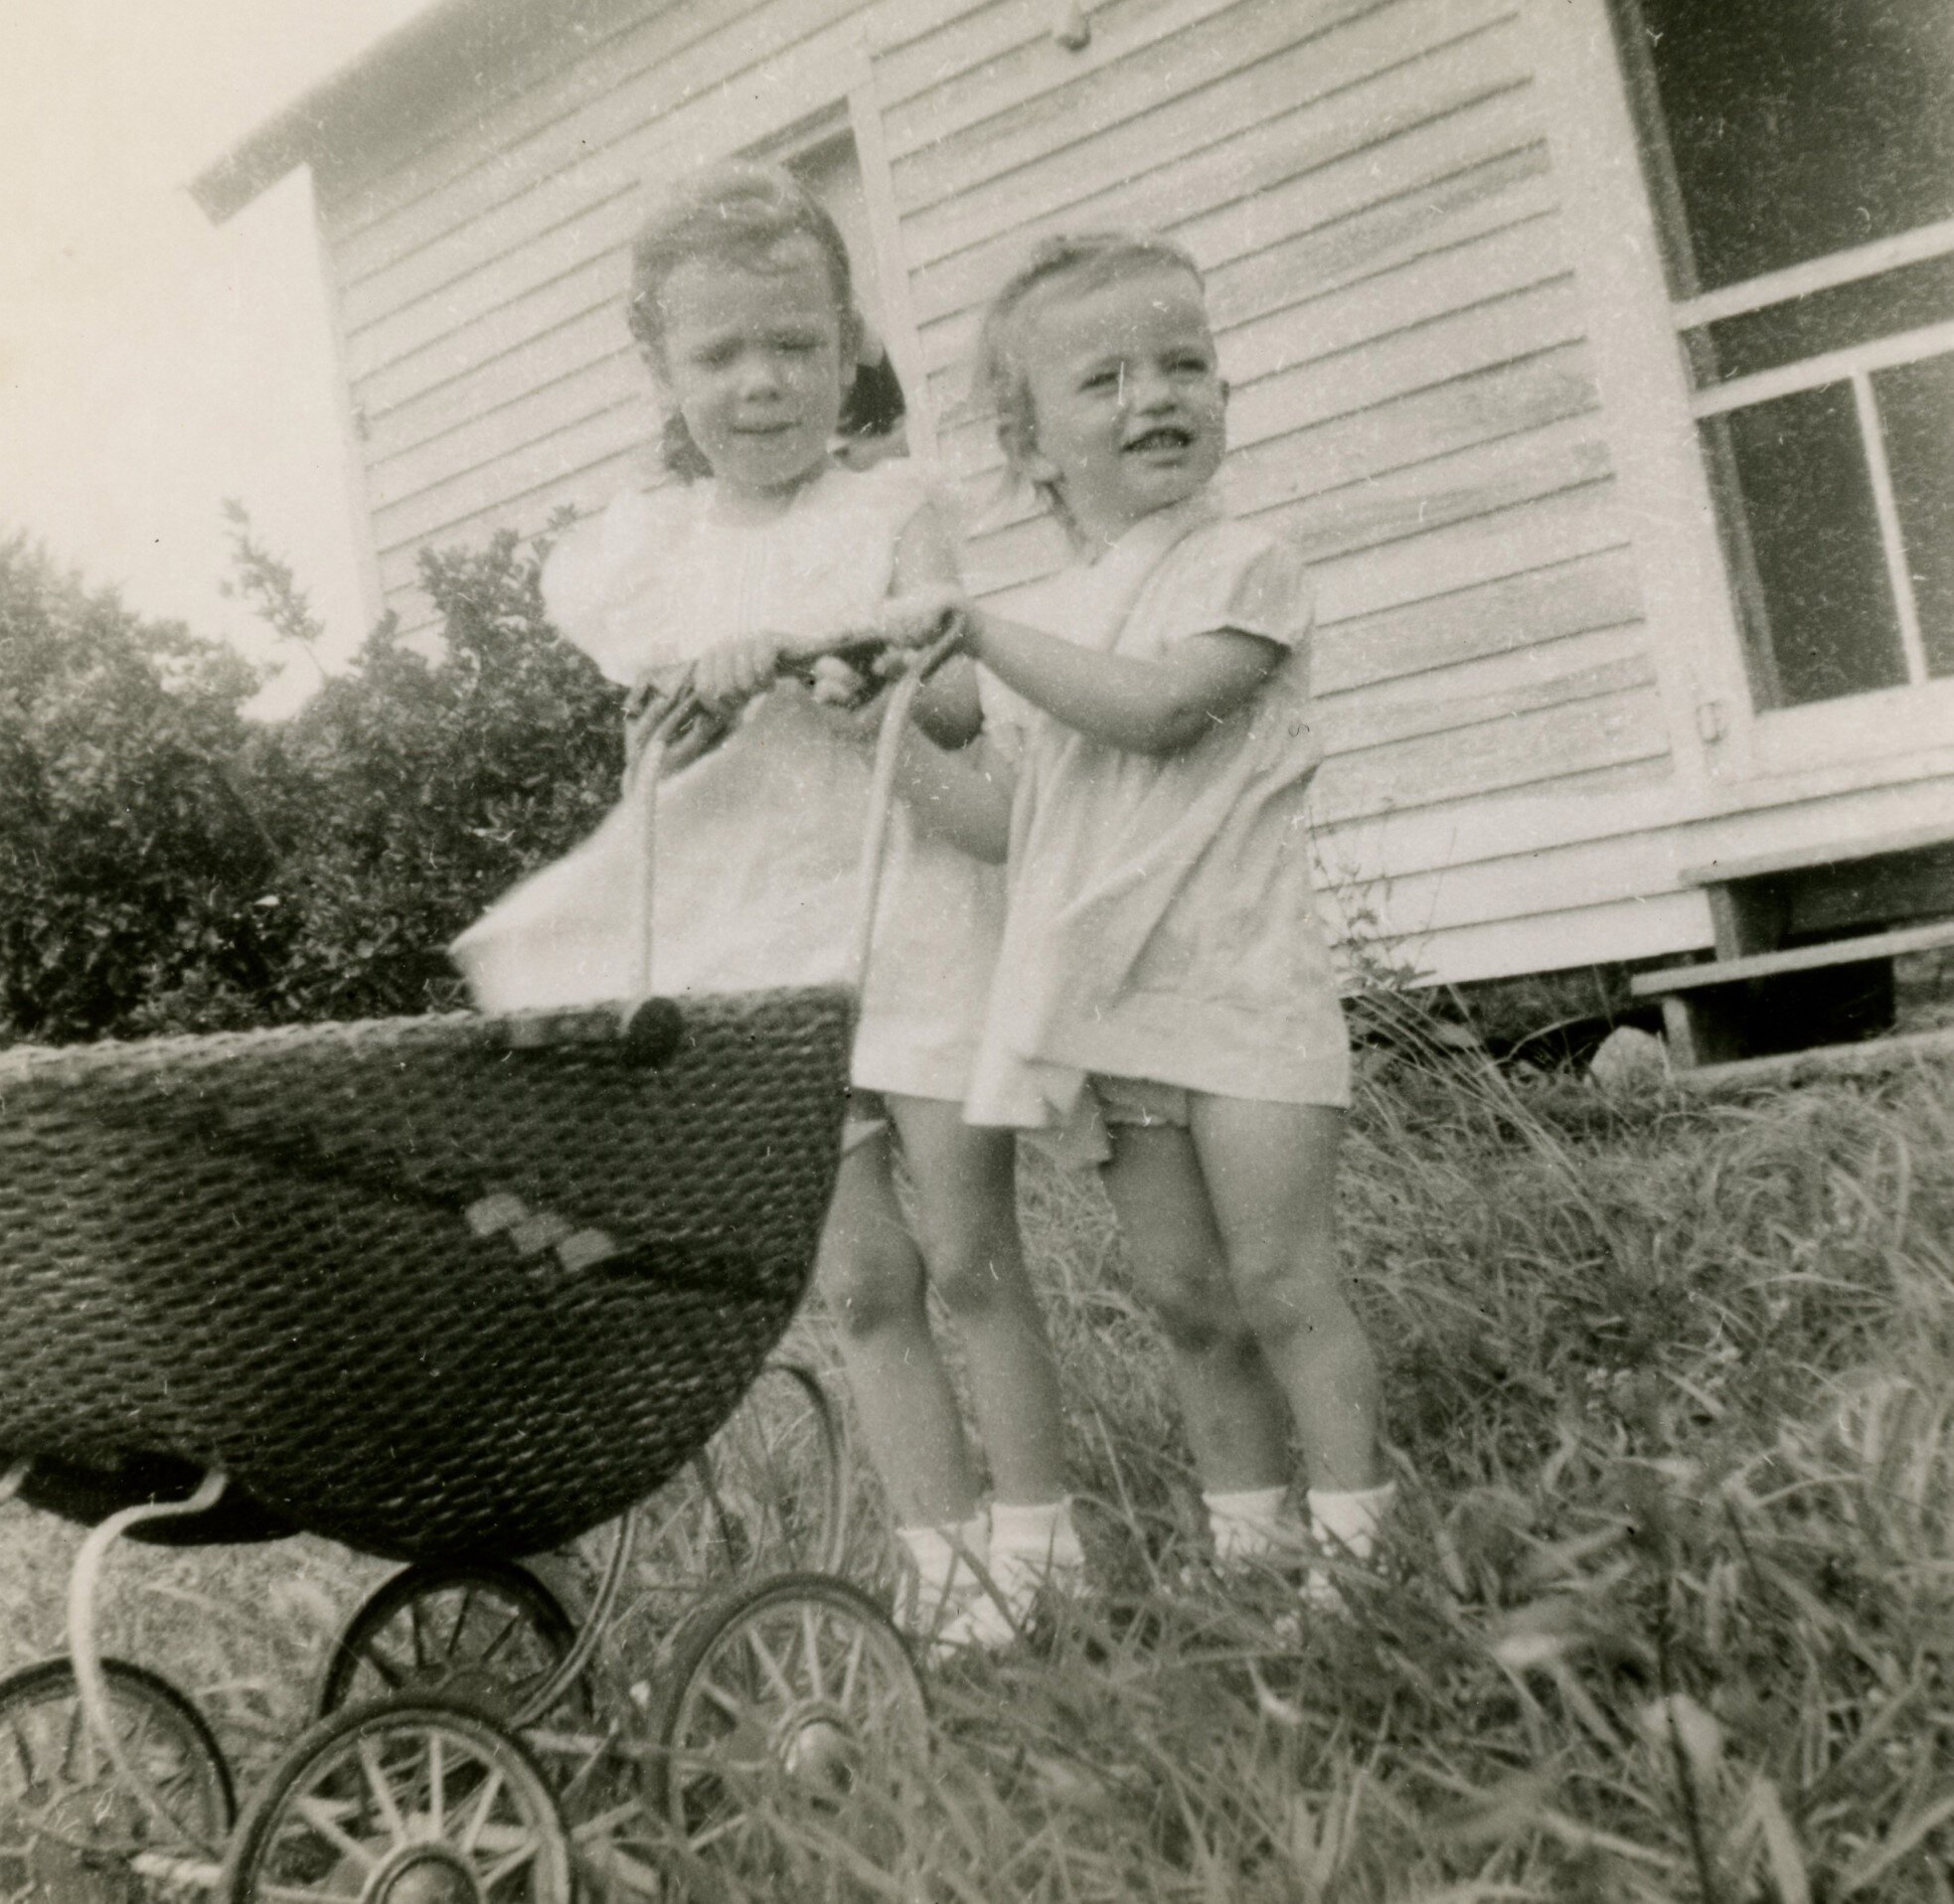 Lida Mae Pigott Burney and Elaine Chadwick Jones at Gertrude Chadwick’s home onshore